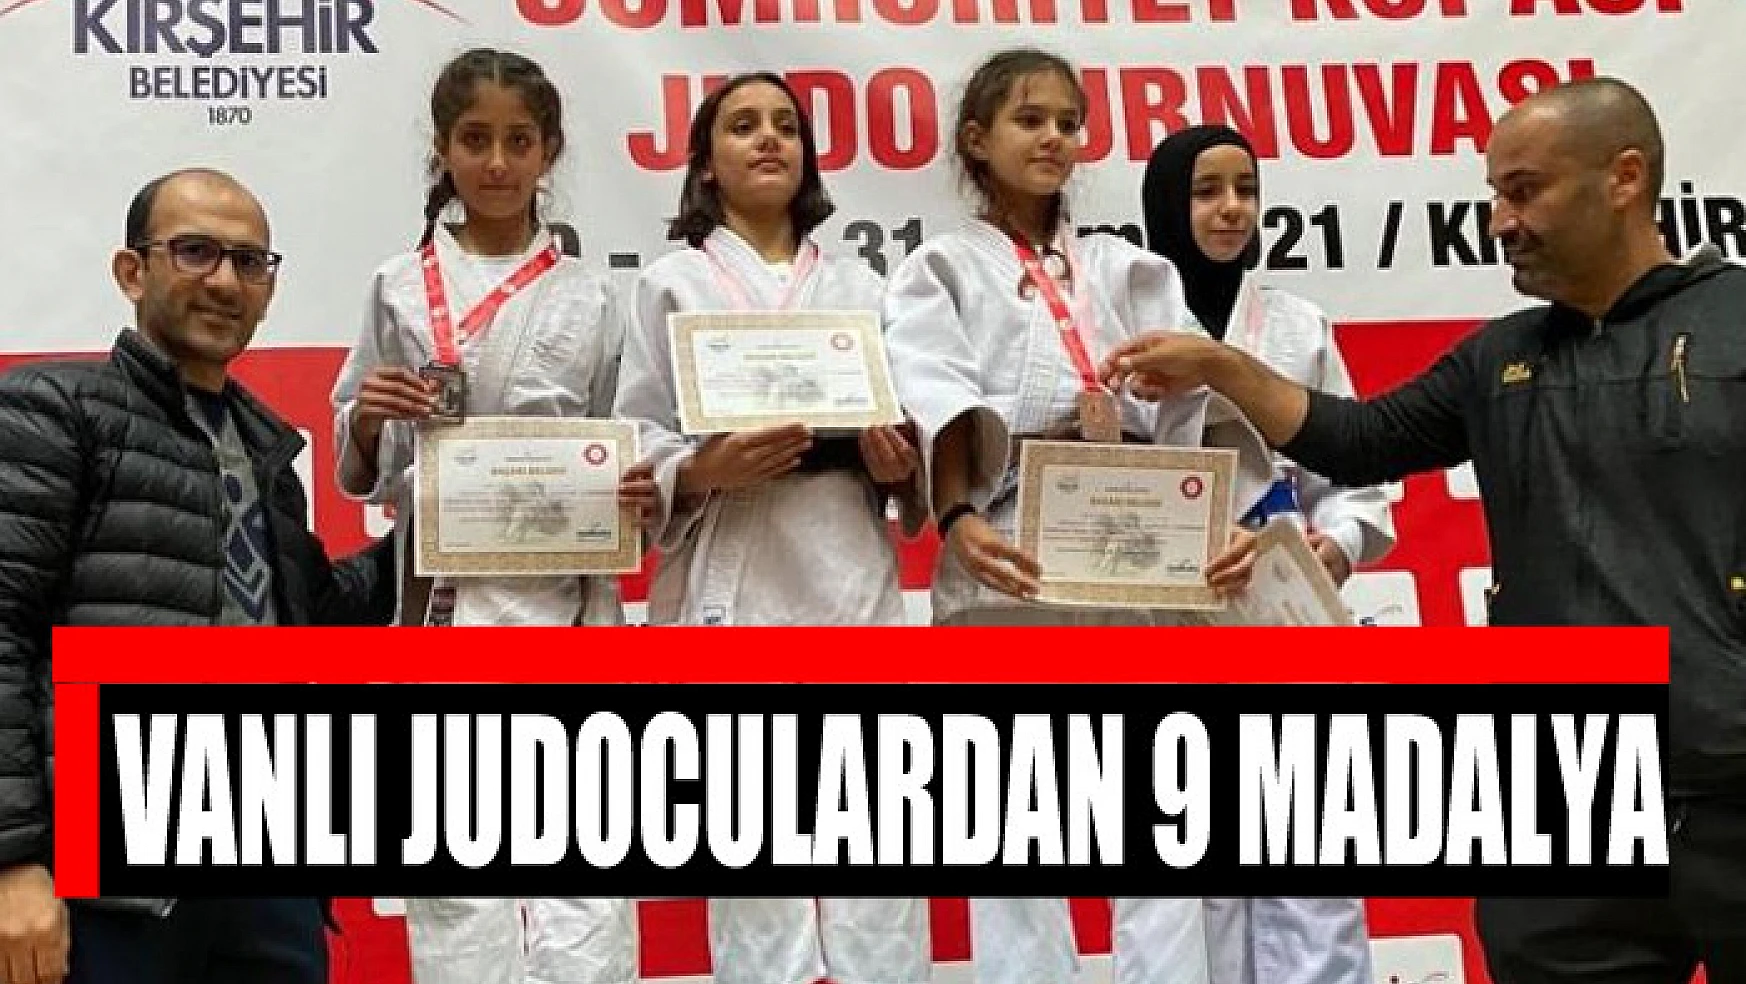 Vanlı judoculardan 9 madalya